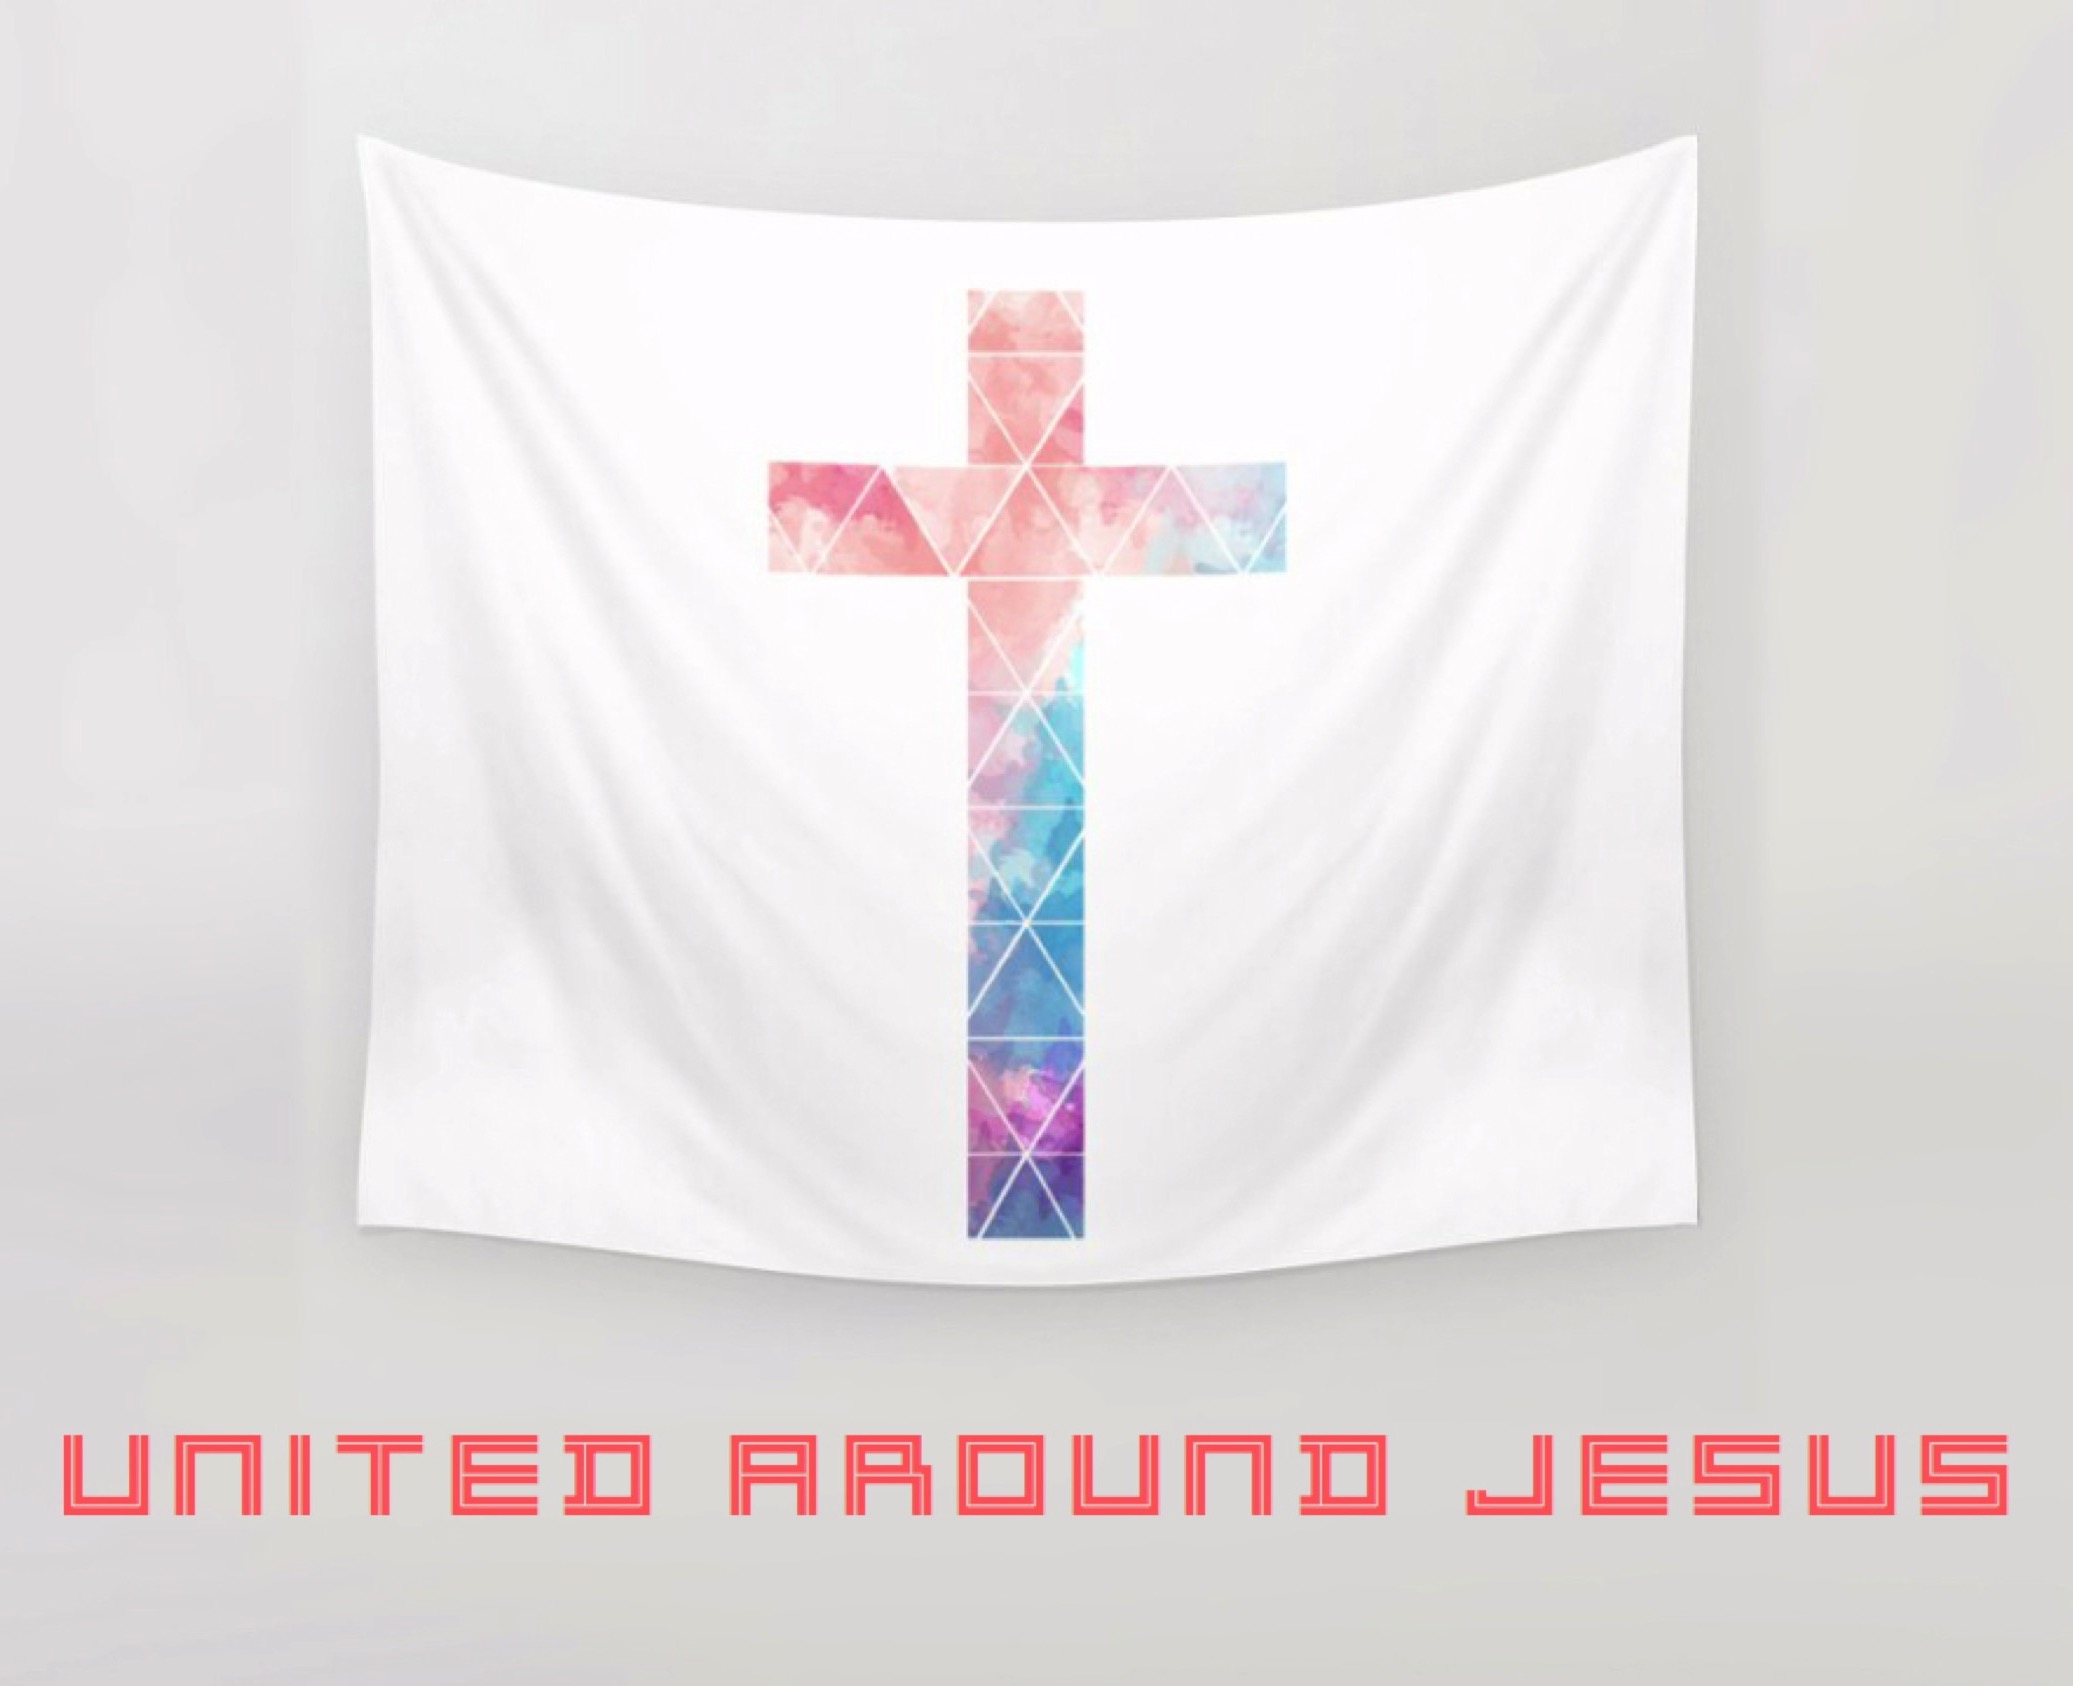 Ryan Post - "United Around Jesus"